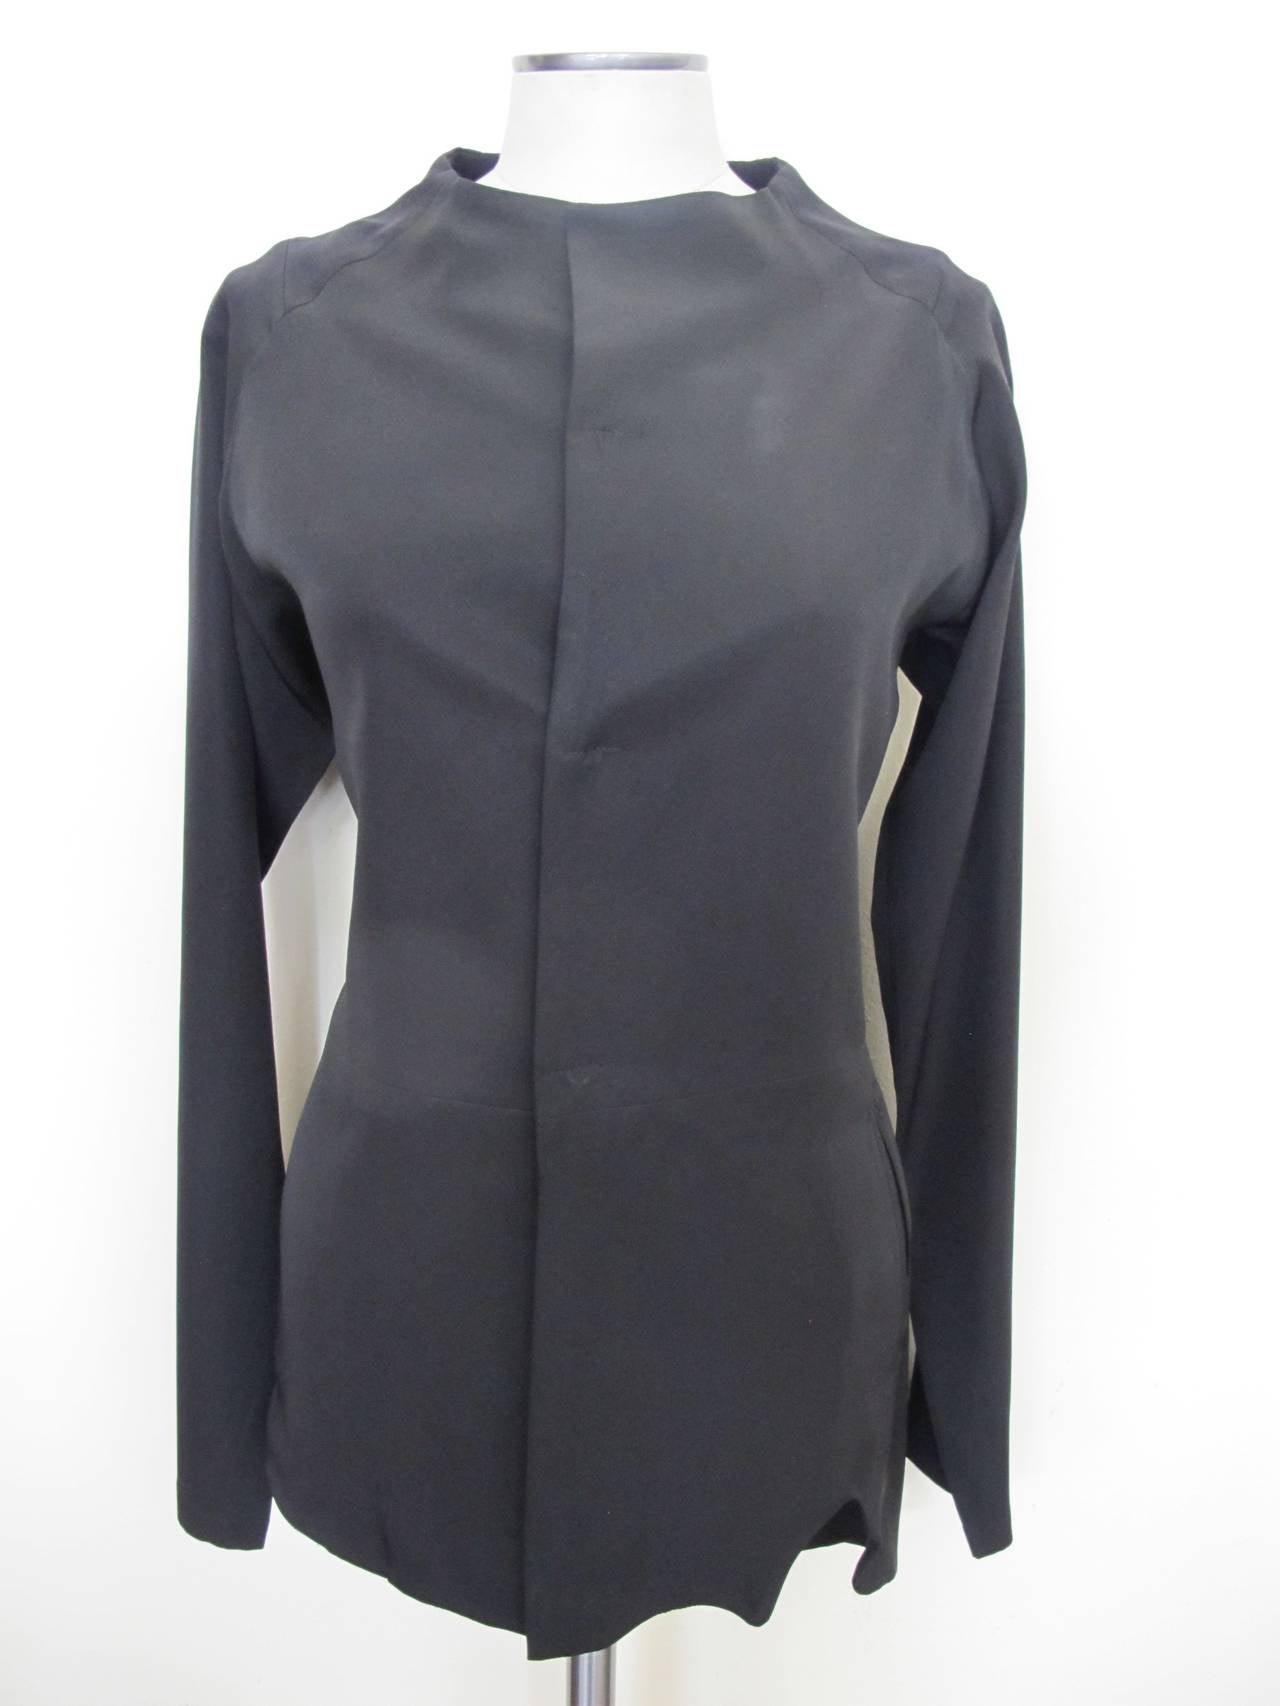 Yohji Yamamoto Black Raglin Sleeve Asymmetrical Jacket In Excellent Condition For Sale In San Francisco, CA